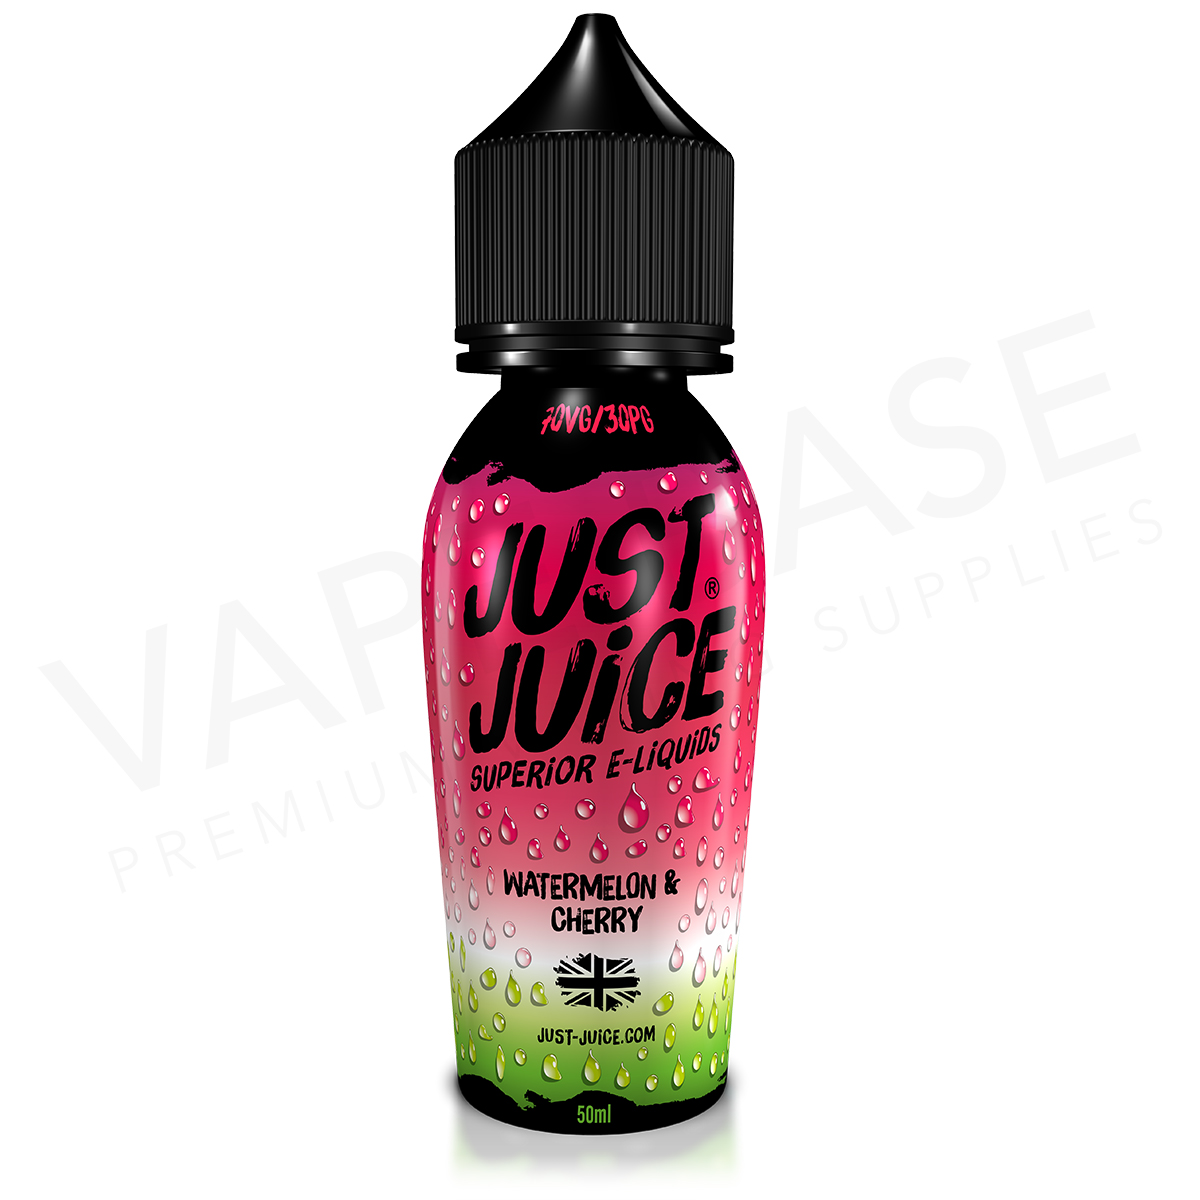 Watermelon & Cherry Shortfill E-Liquid by Just Juice 50ml